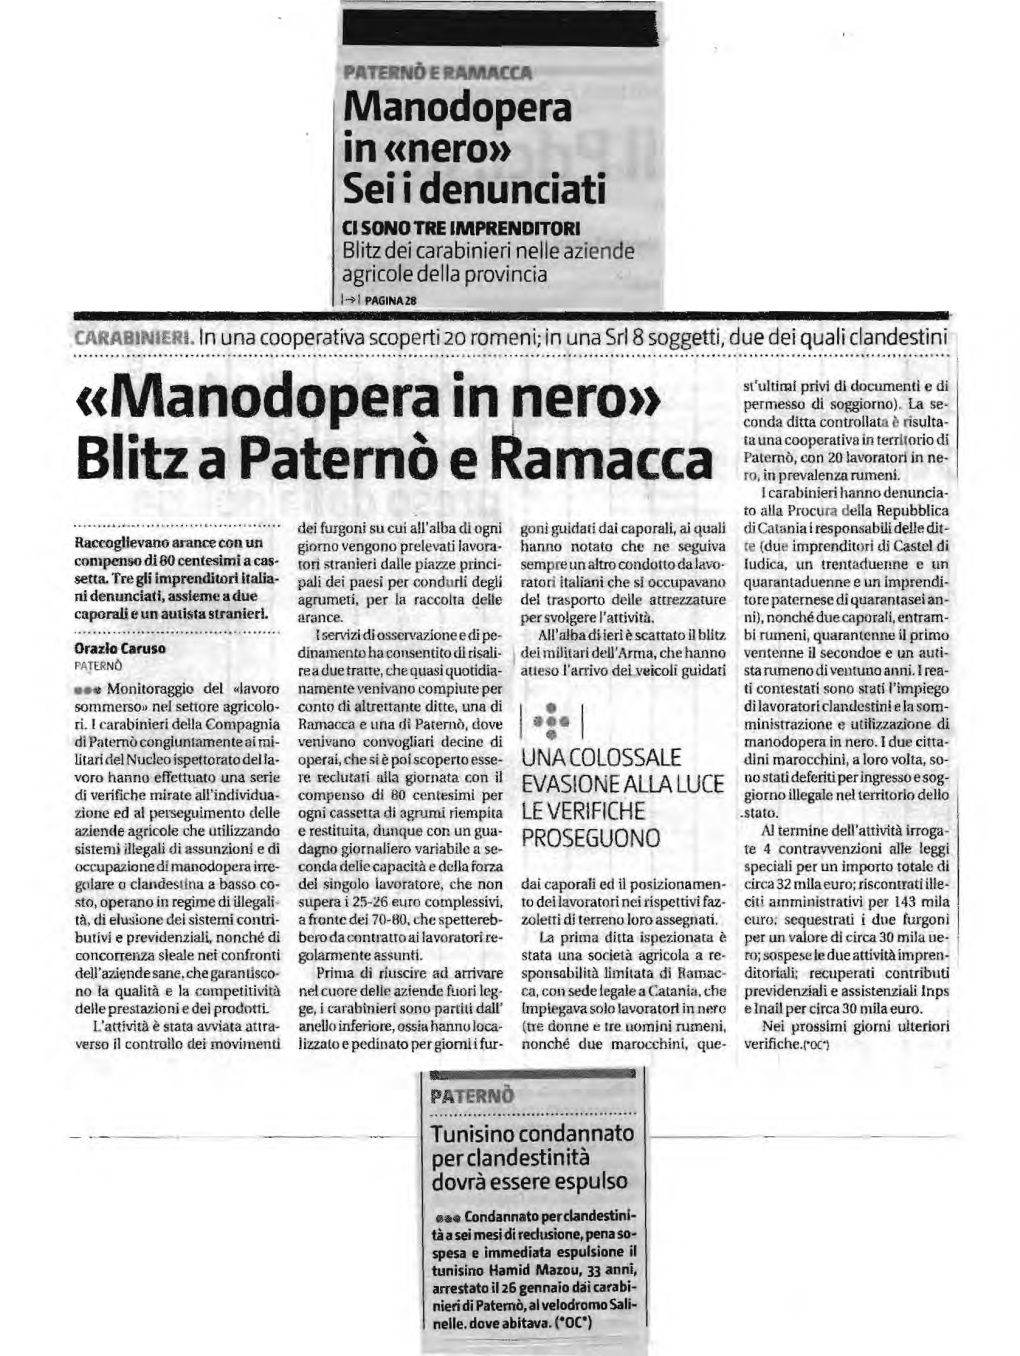 Blitz a Paternò E Ramacca Ro, in Prevajenzn Rumeni